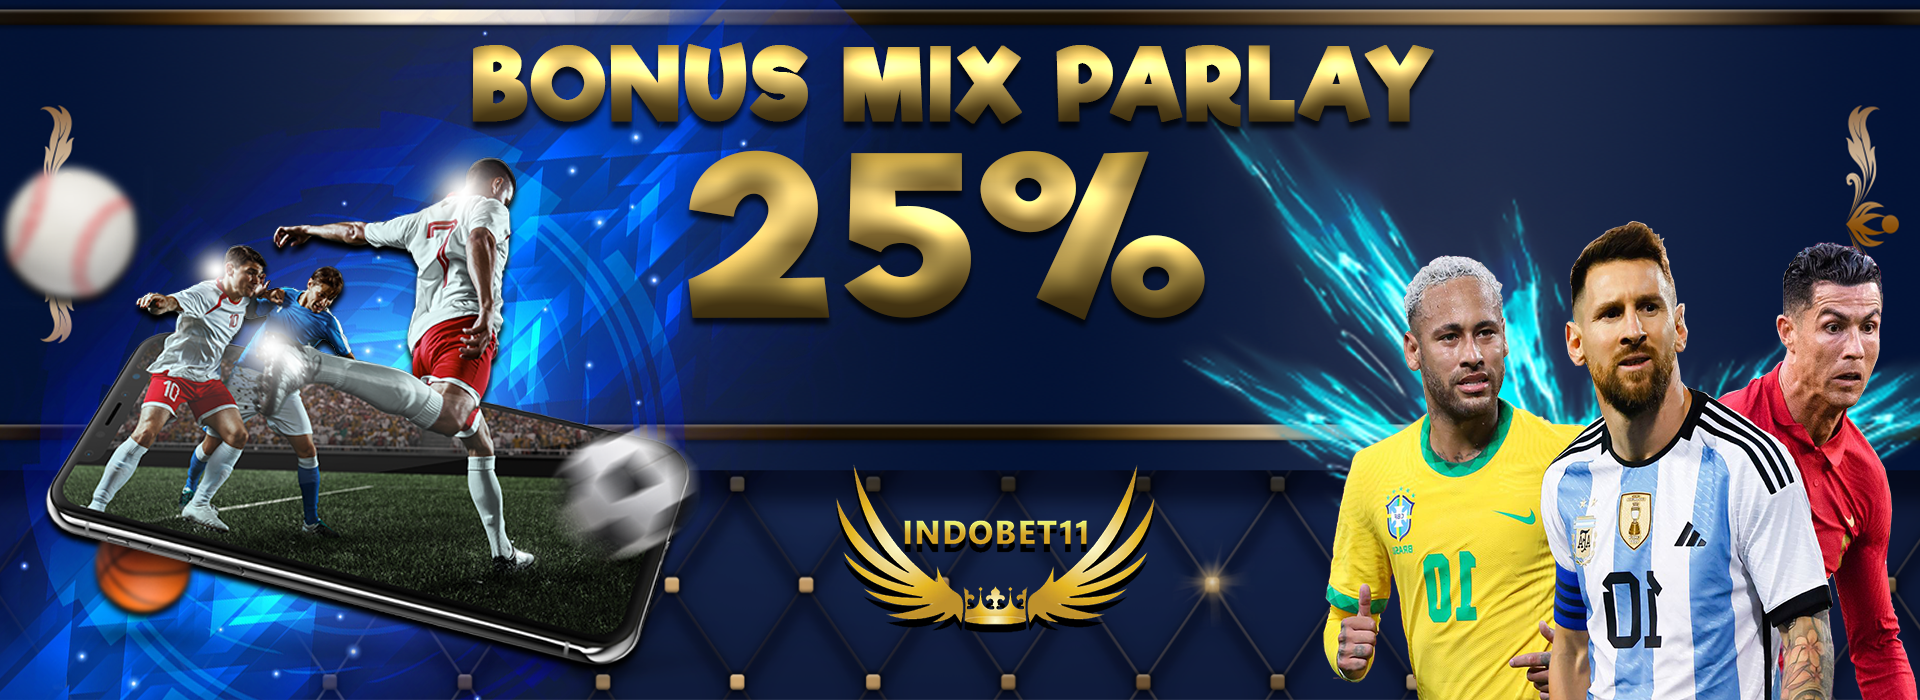 Bonus Mix Parlay 25 %